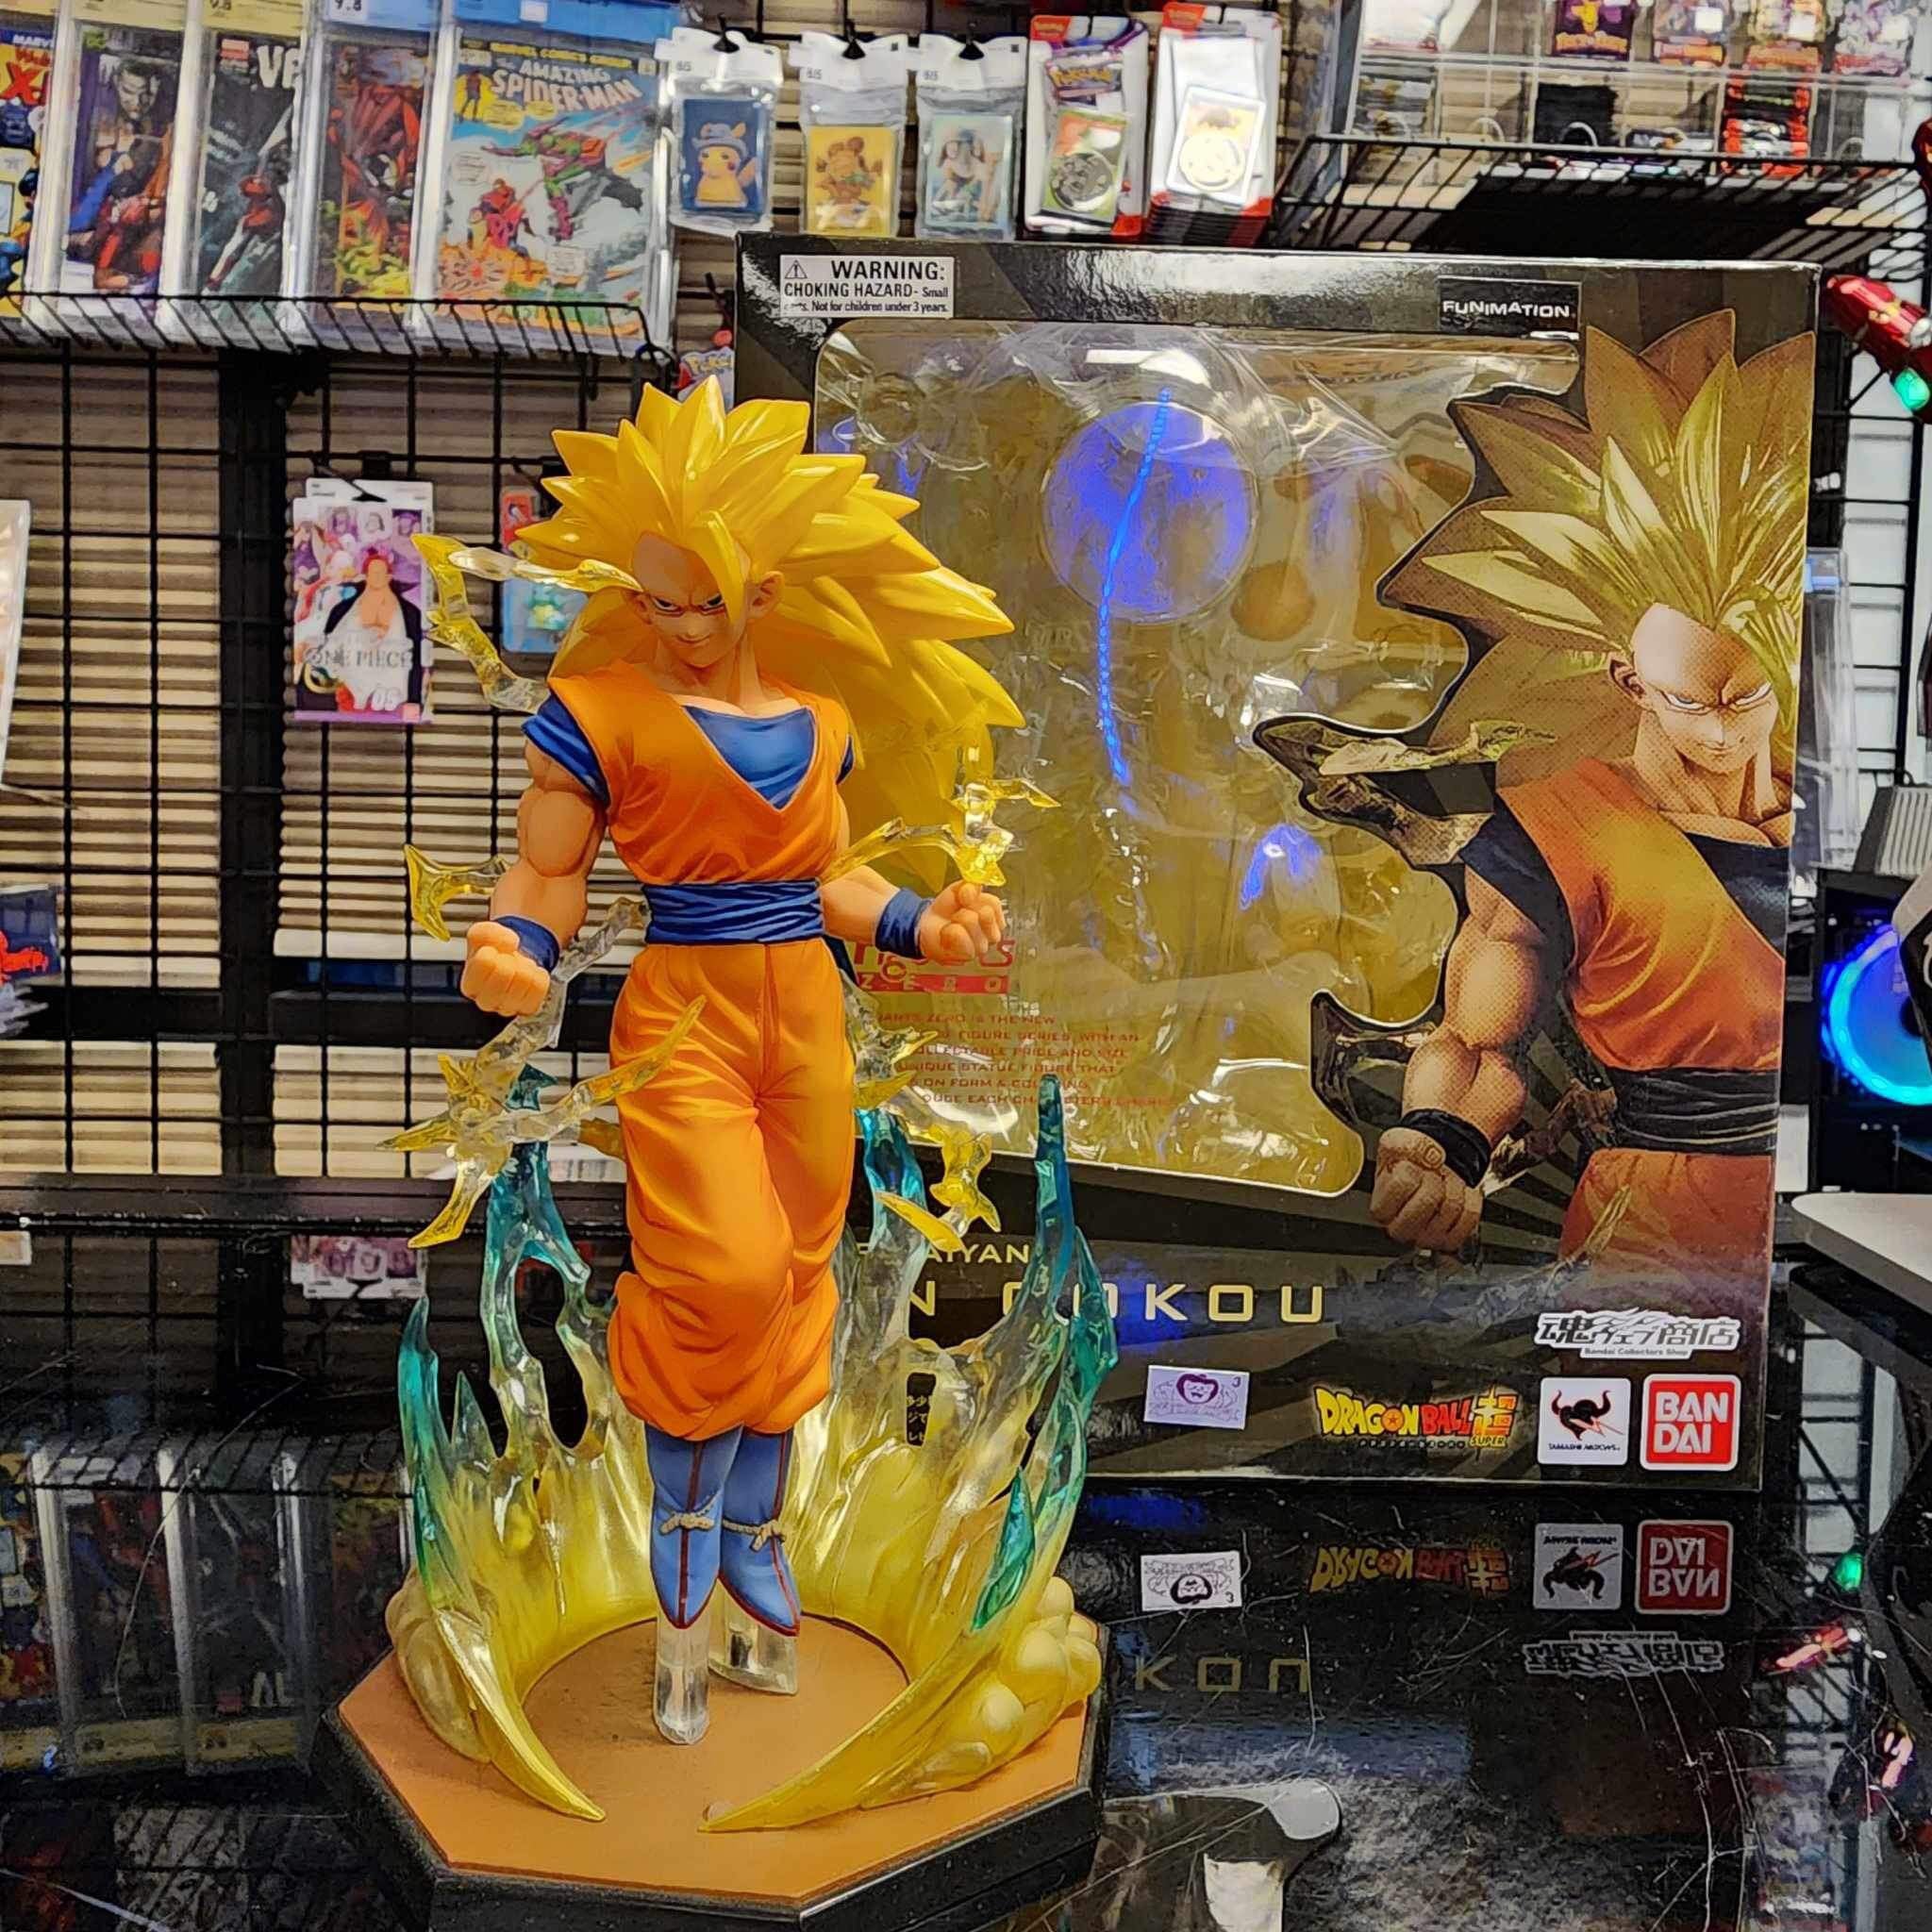 Goku Super Saiyan 3 Diorama from Dragonball